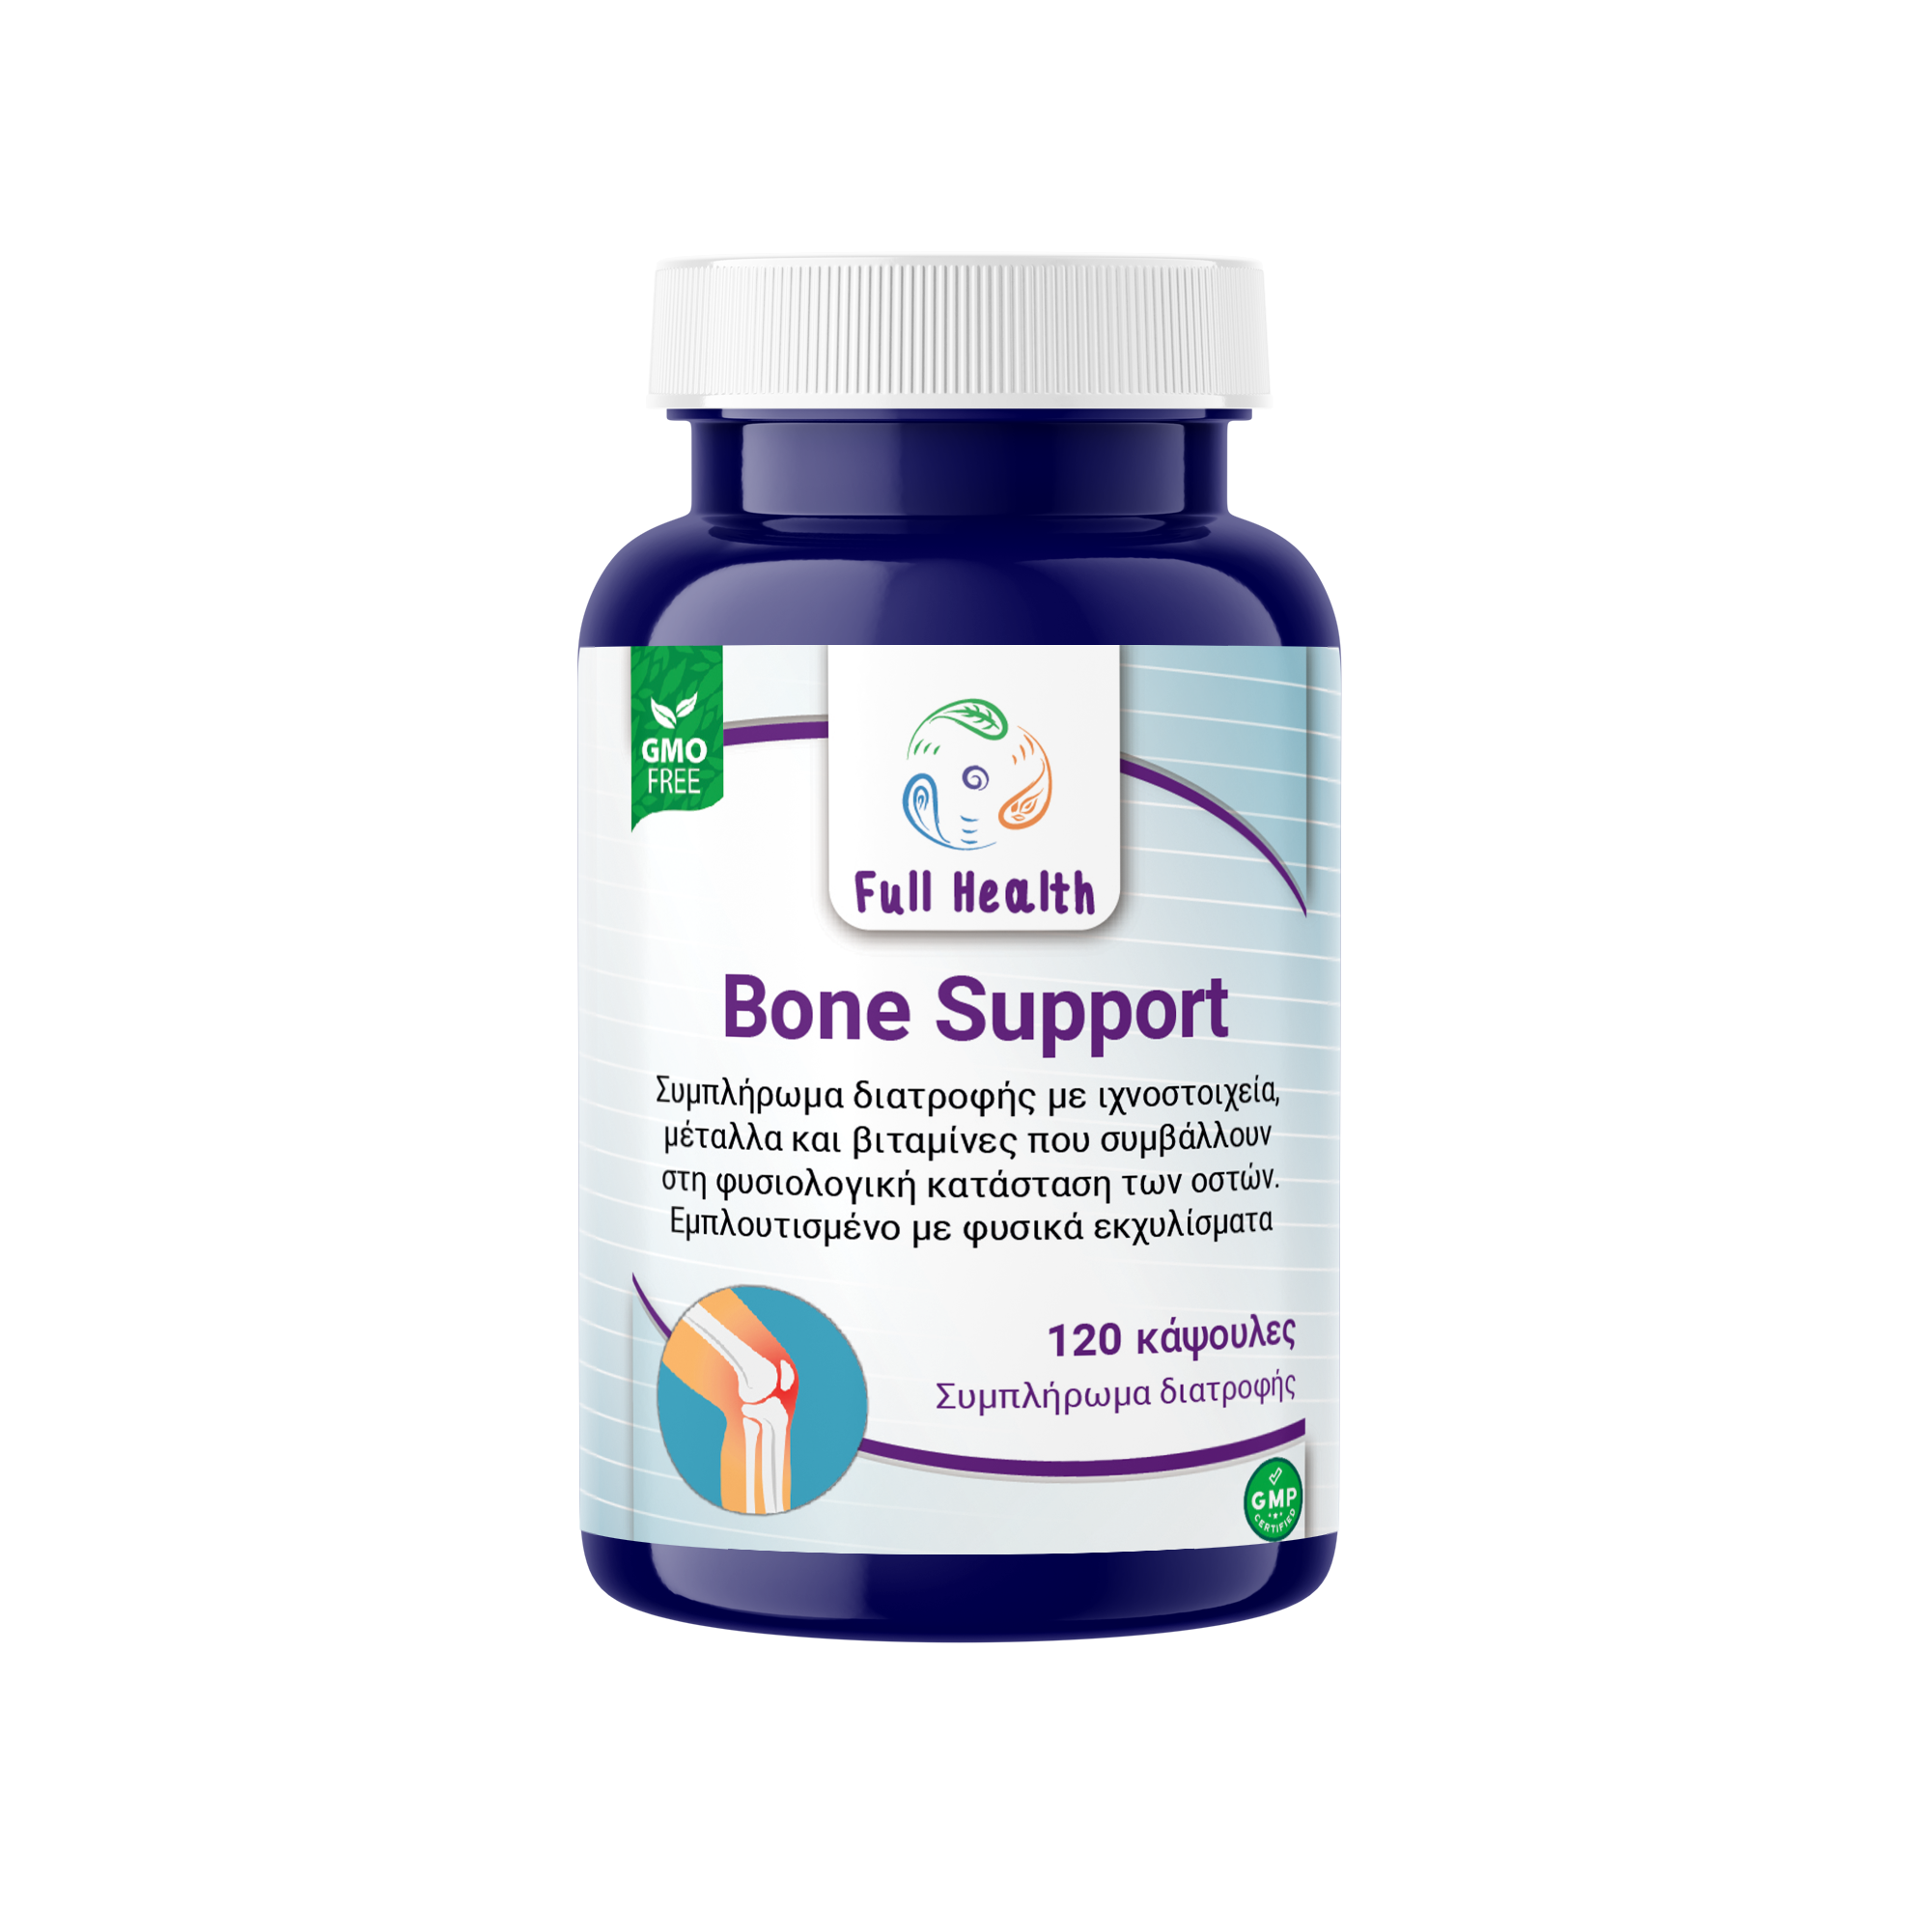 Bone Support 120 caps (Συμπλήρωμα διατροφής με ιχνοστοιχεία, μέταλλα και βιταμίνες που συμβάλλουν στην φυσιολογική κατάσταση των οστών, εμπλουτισμένο με φυσικά εκχυλίσματα)